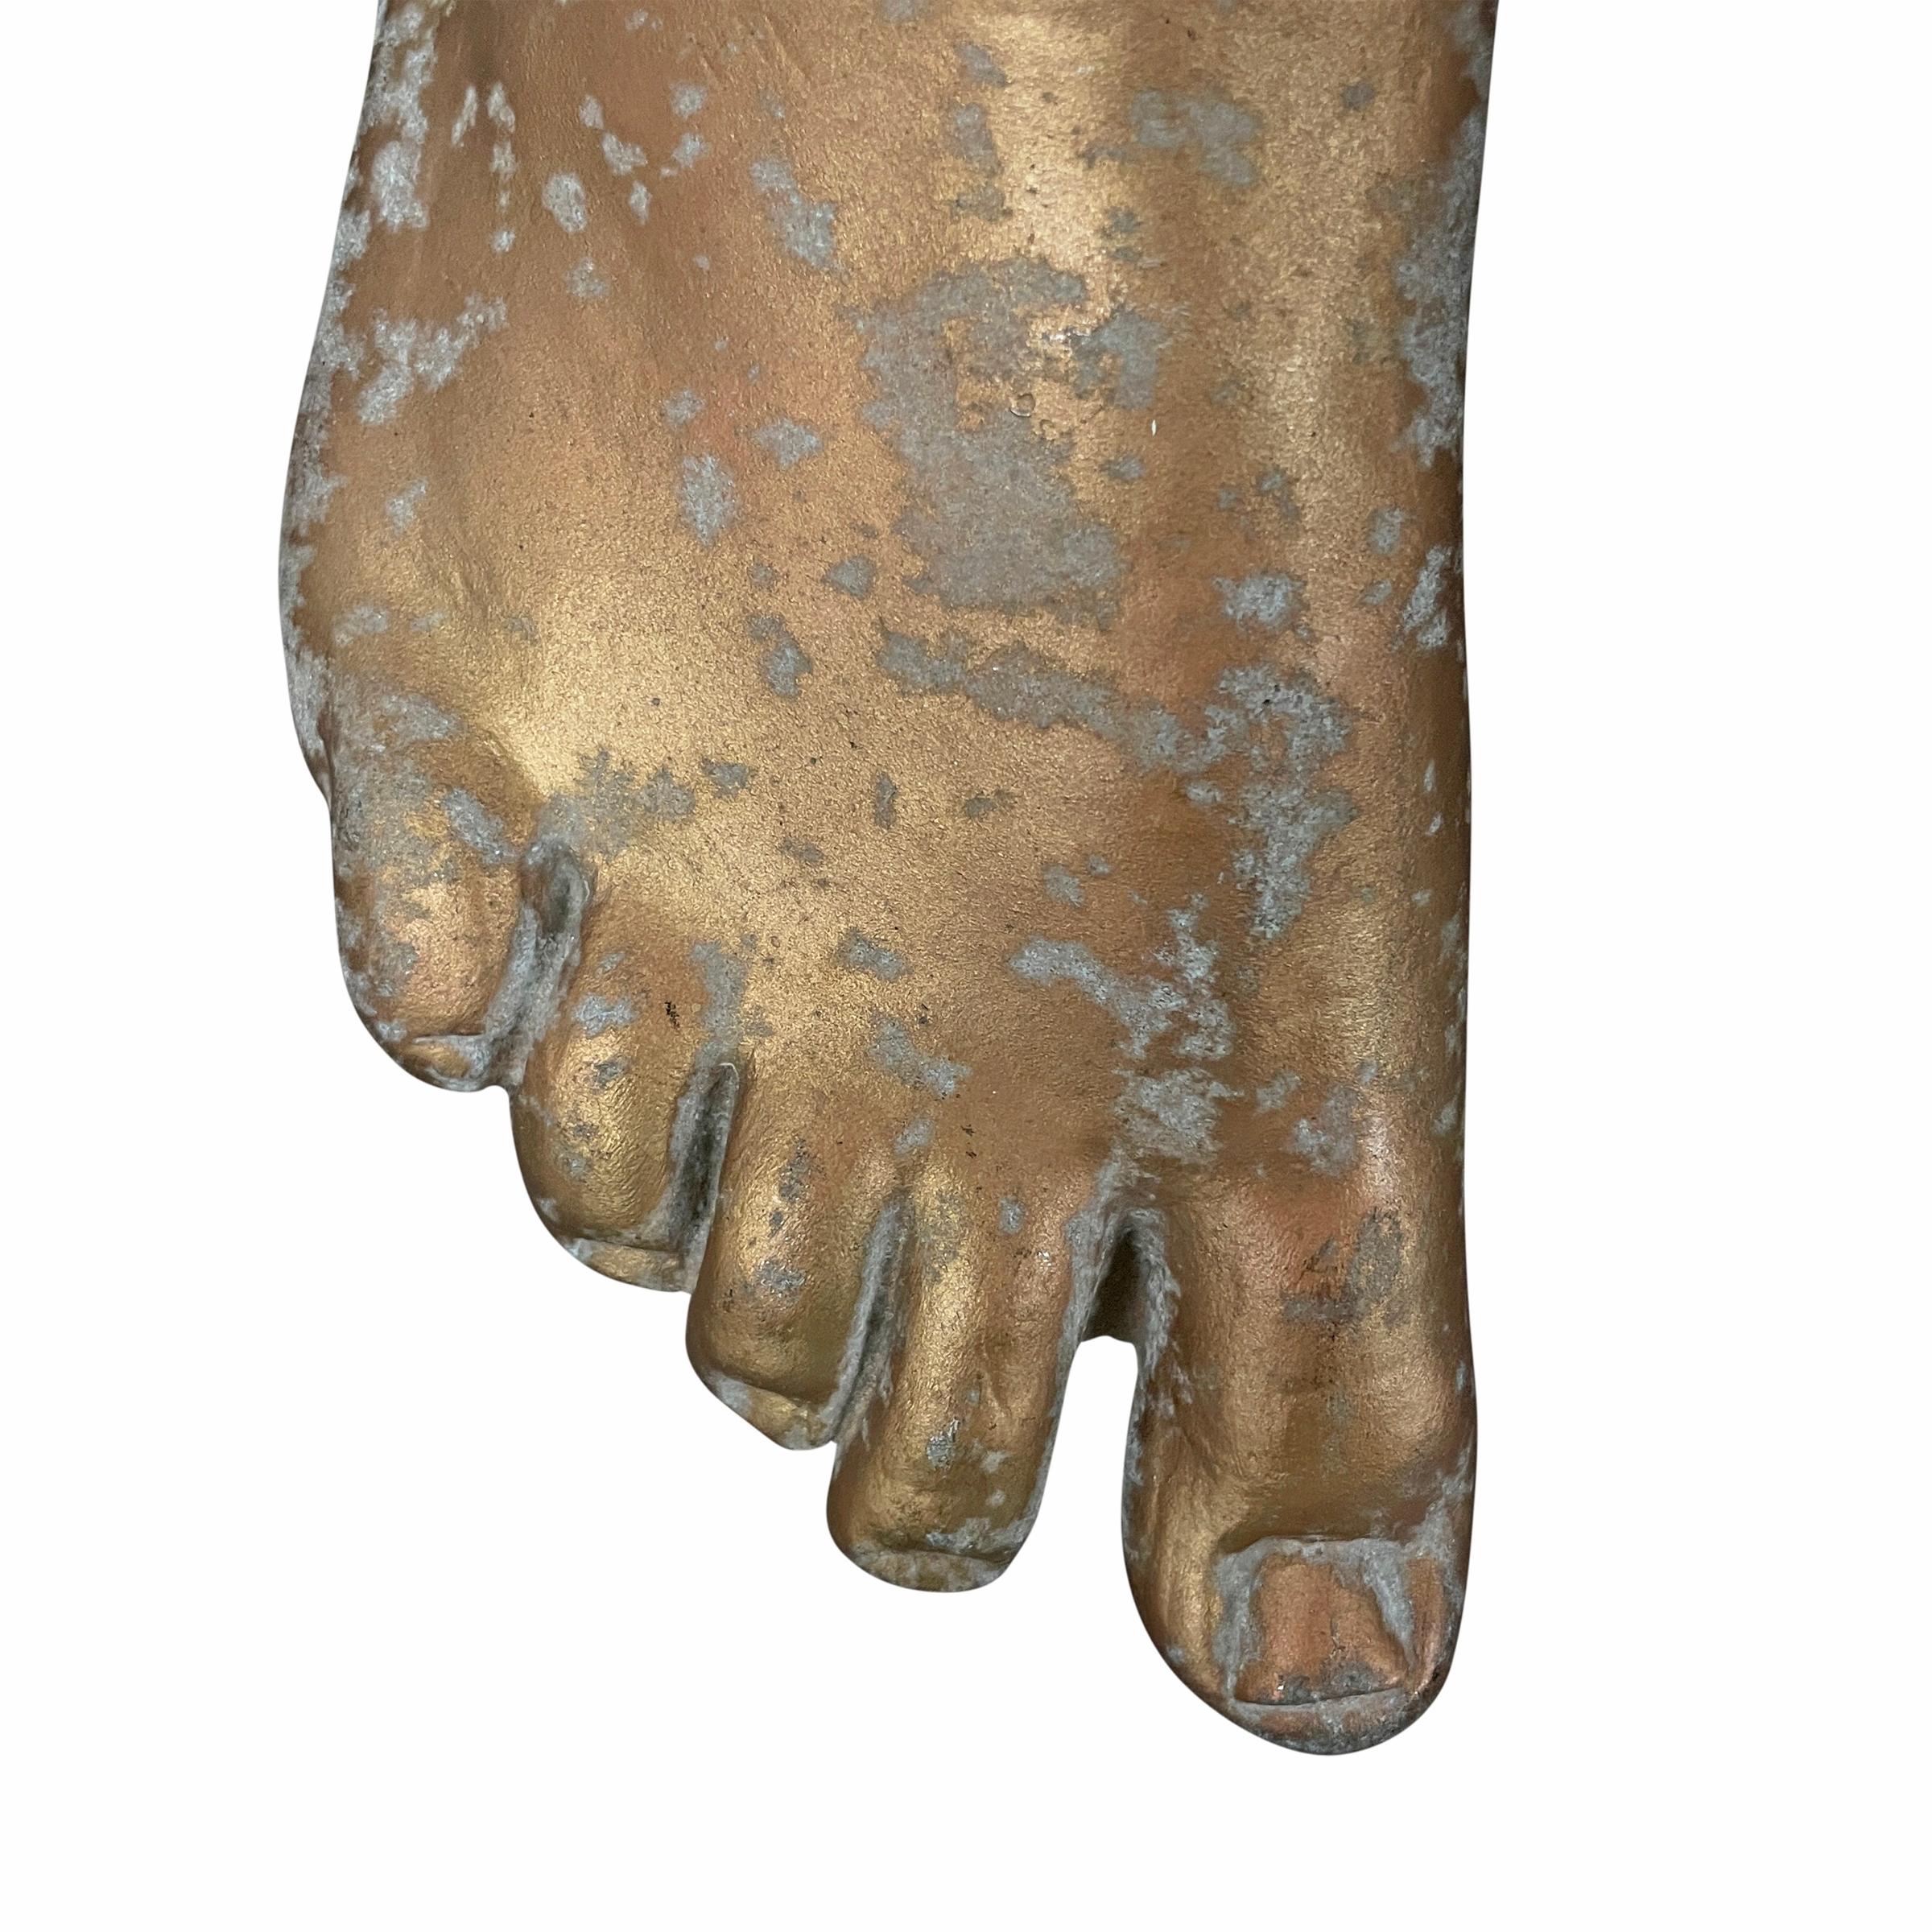 Colossal Gilt Foot 1